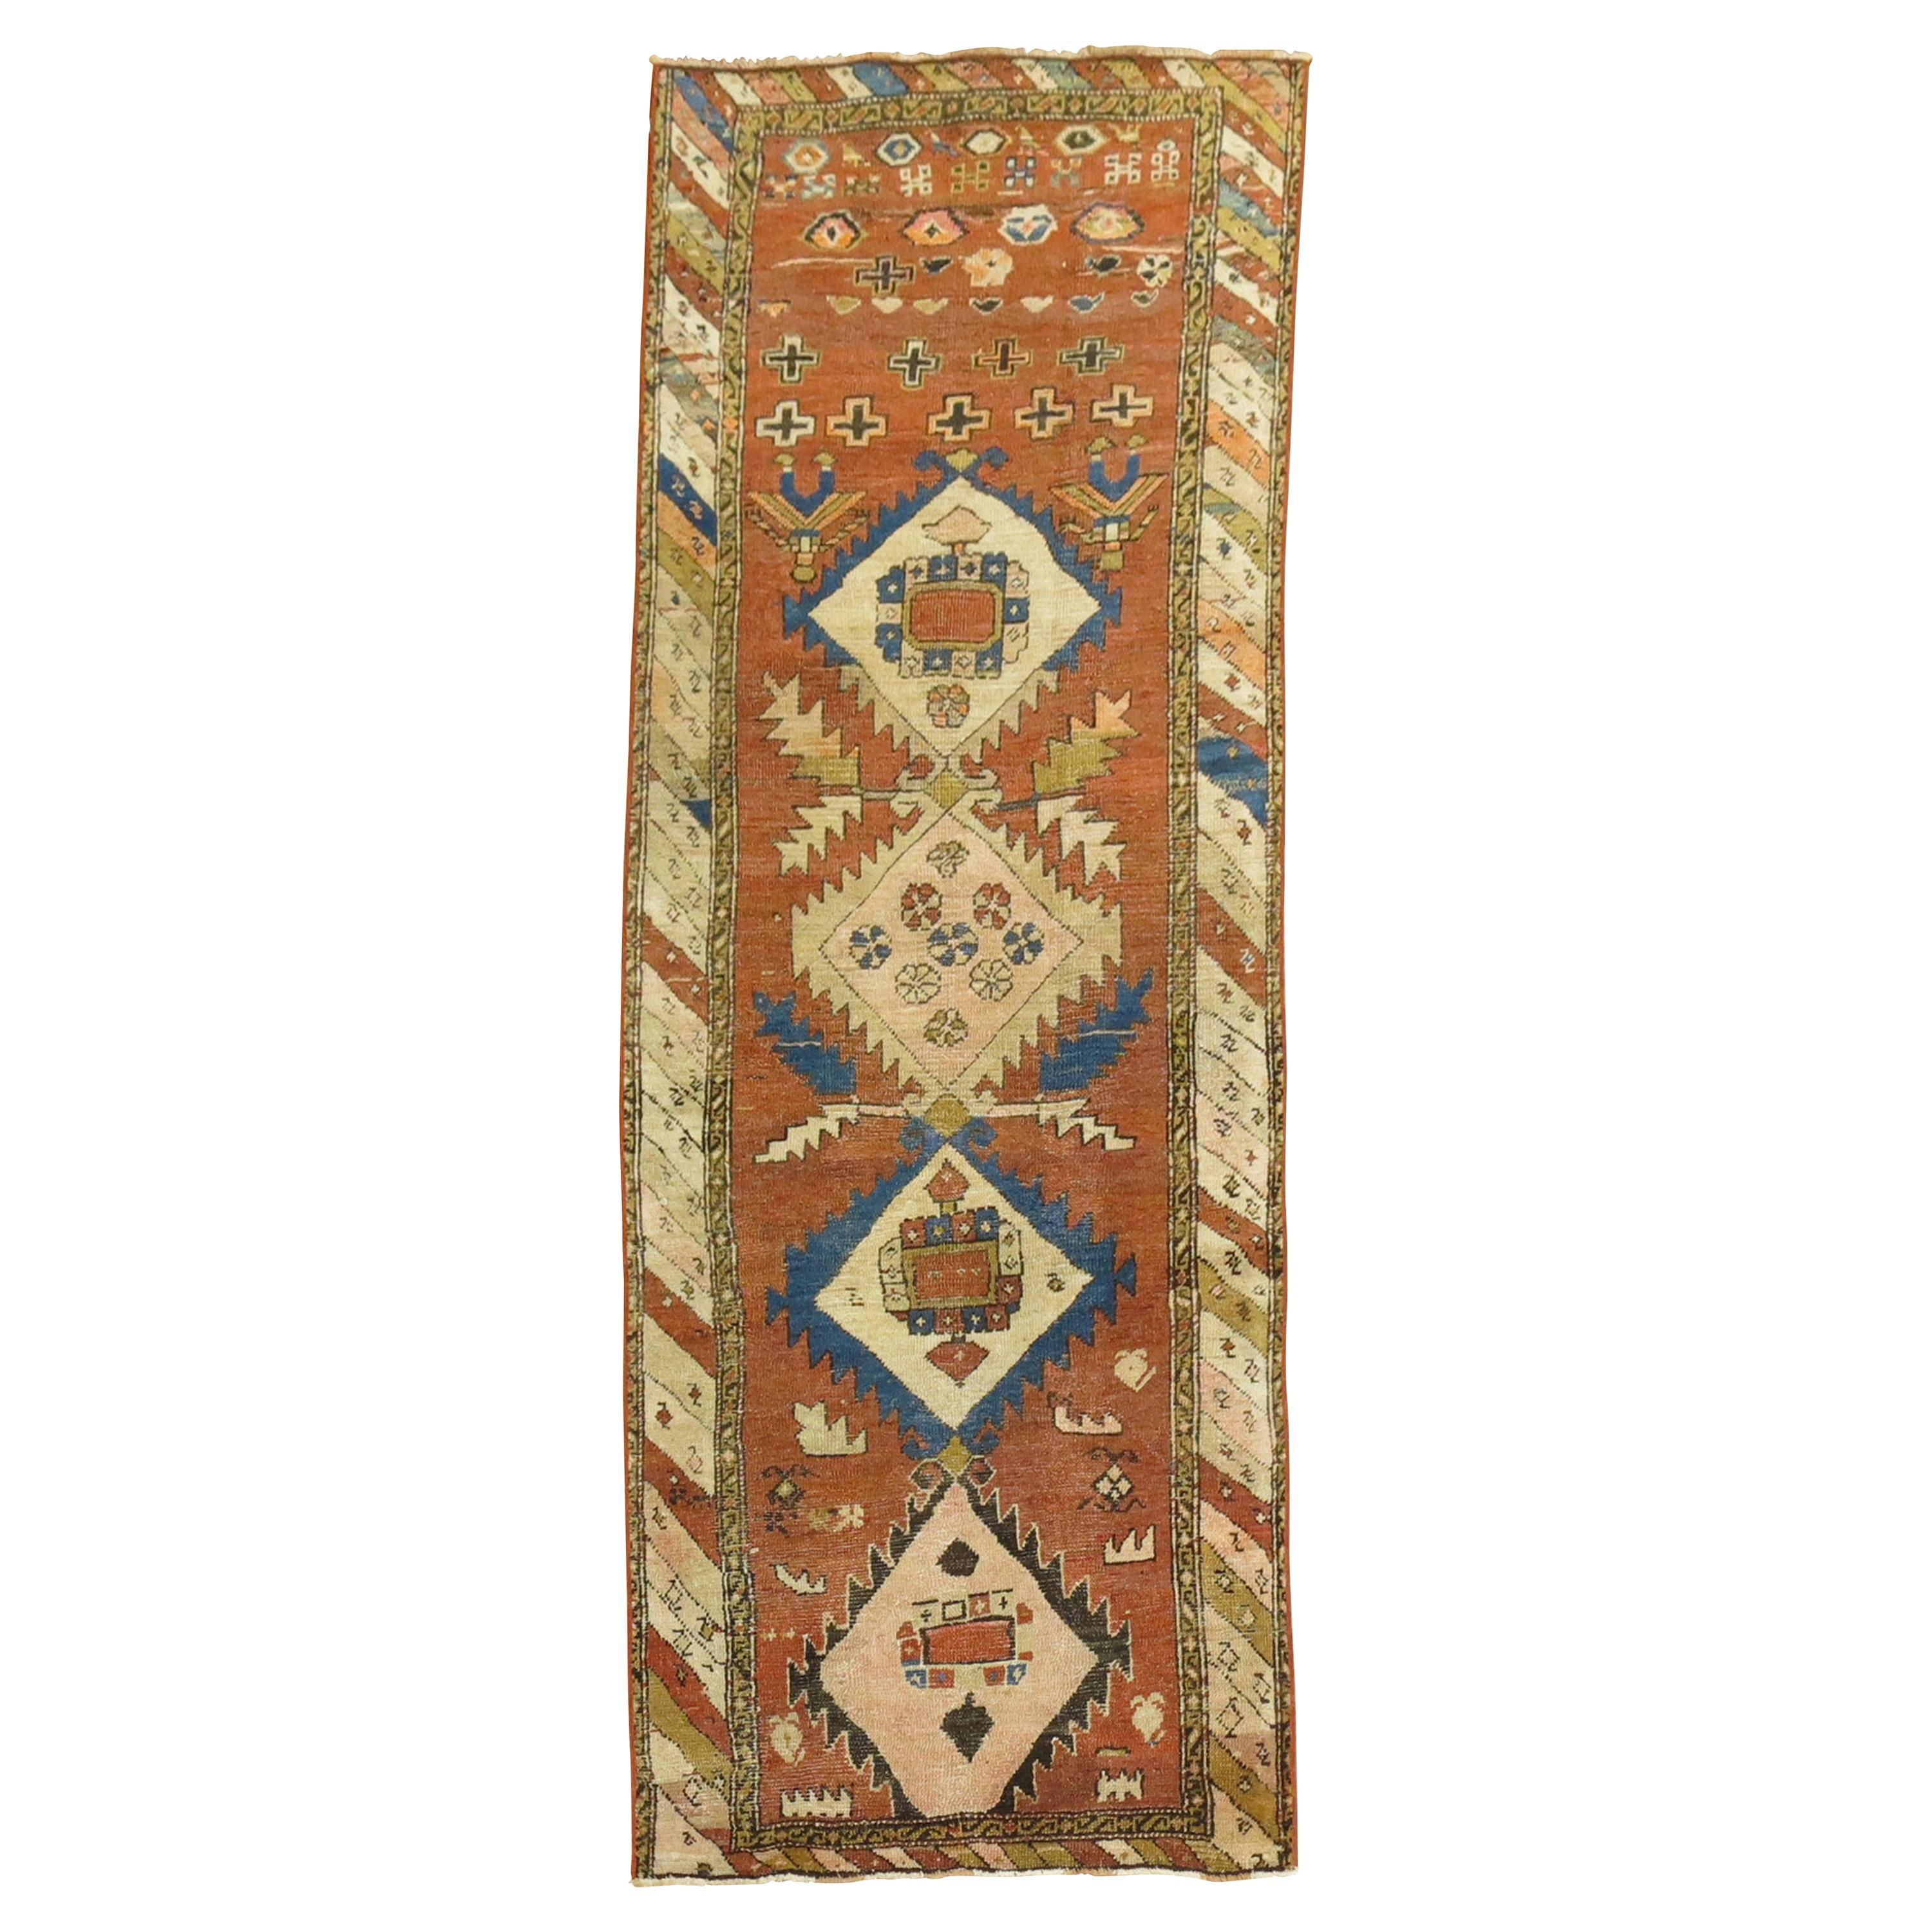 Late 19th century Tribal Rustic Color Narrow Short Persian Runner